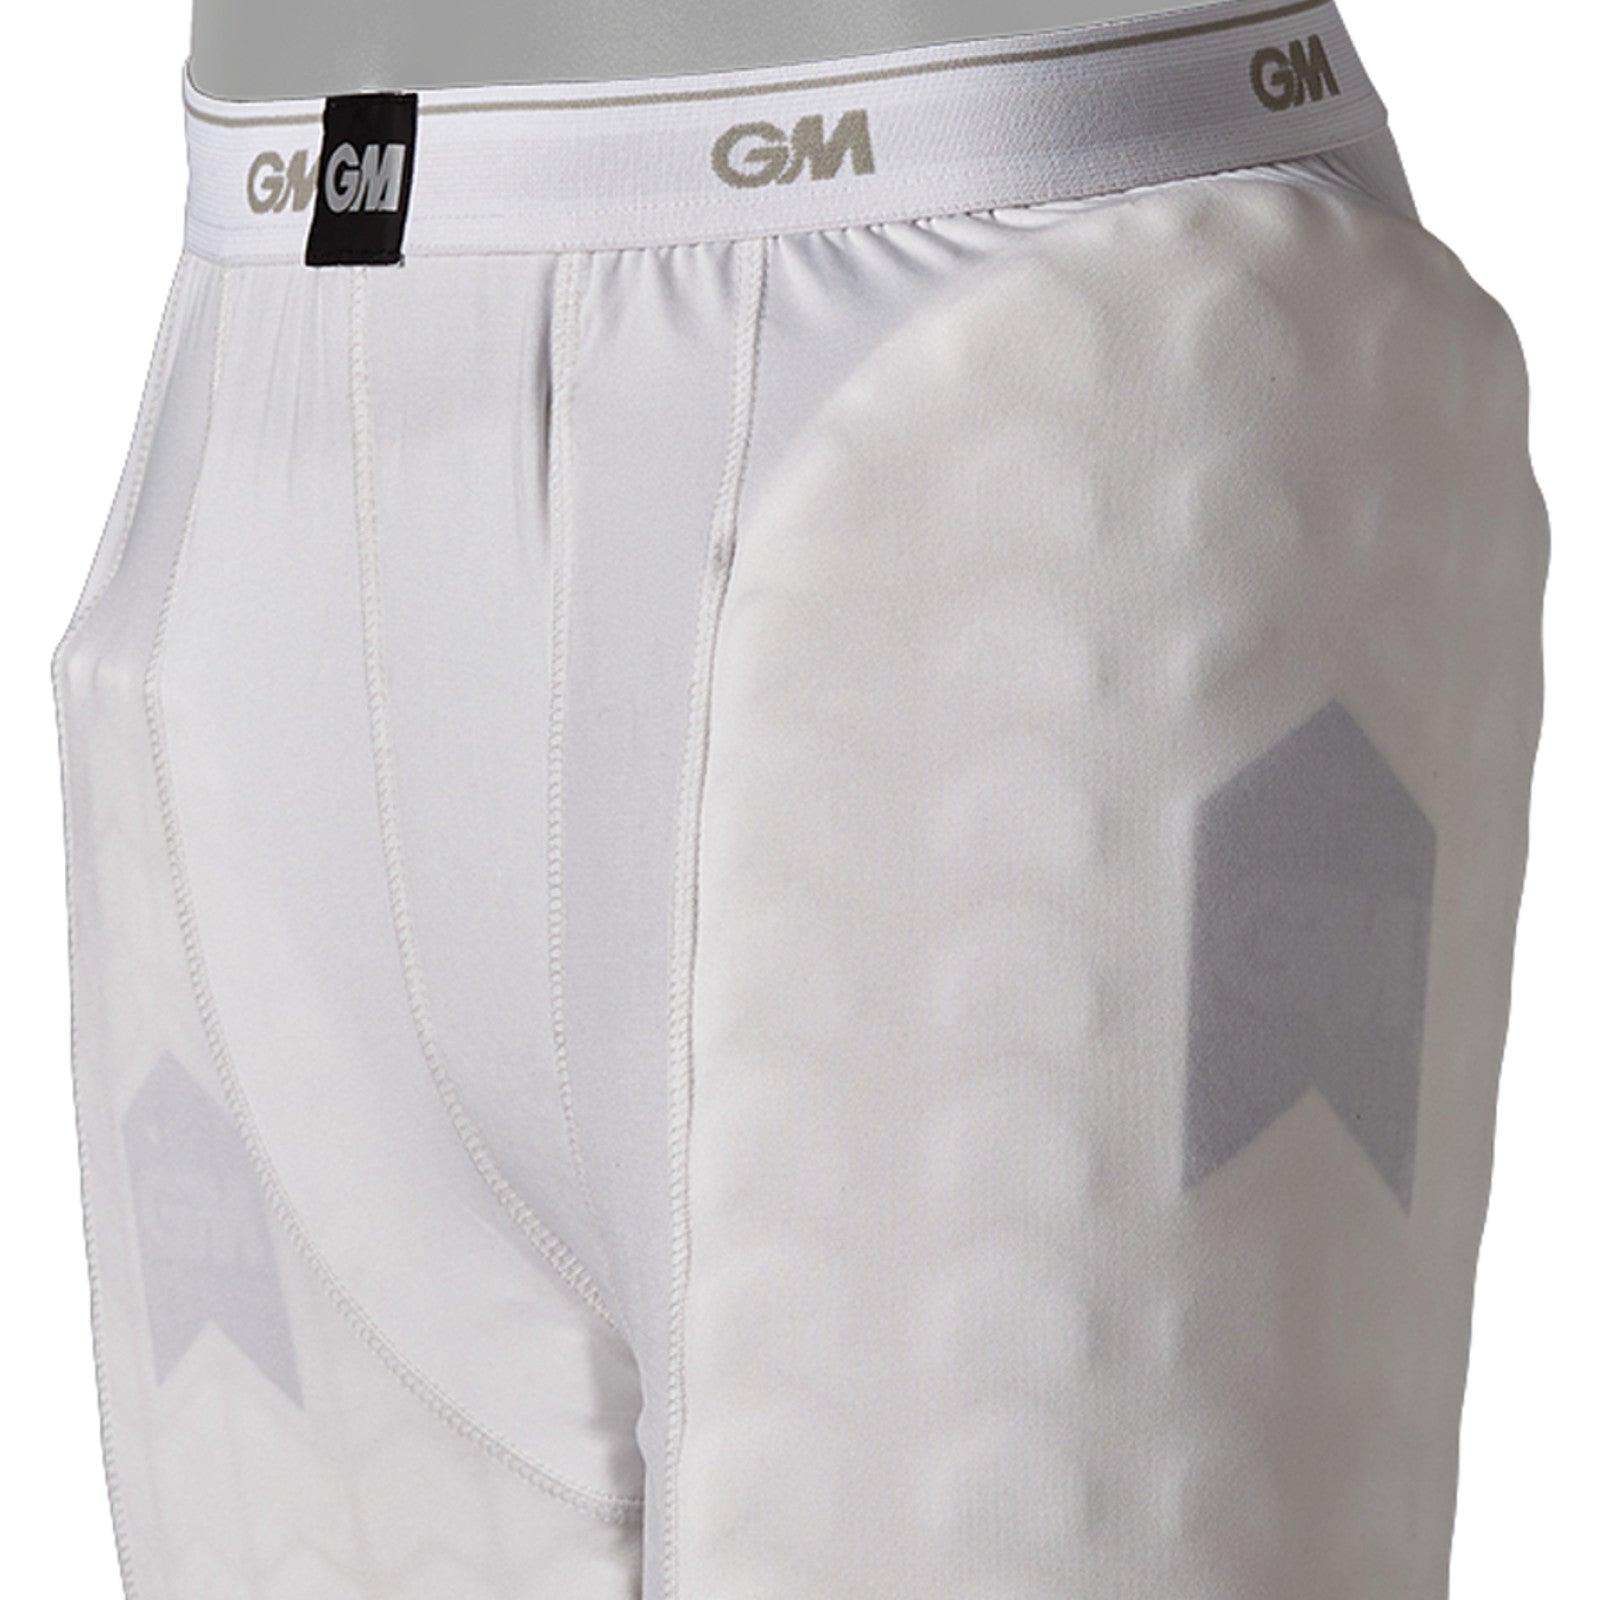 G&M 909 Cricket Protective Shorts Junior Alternate 2